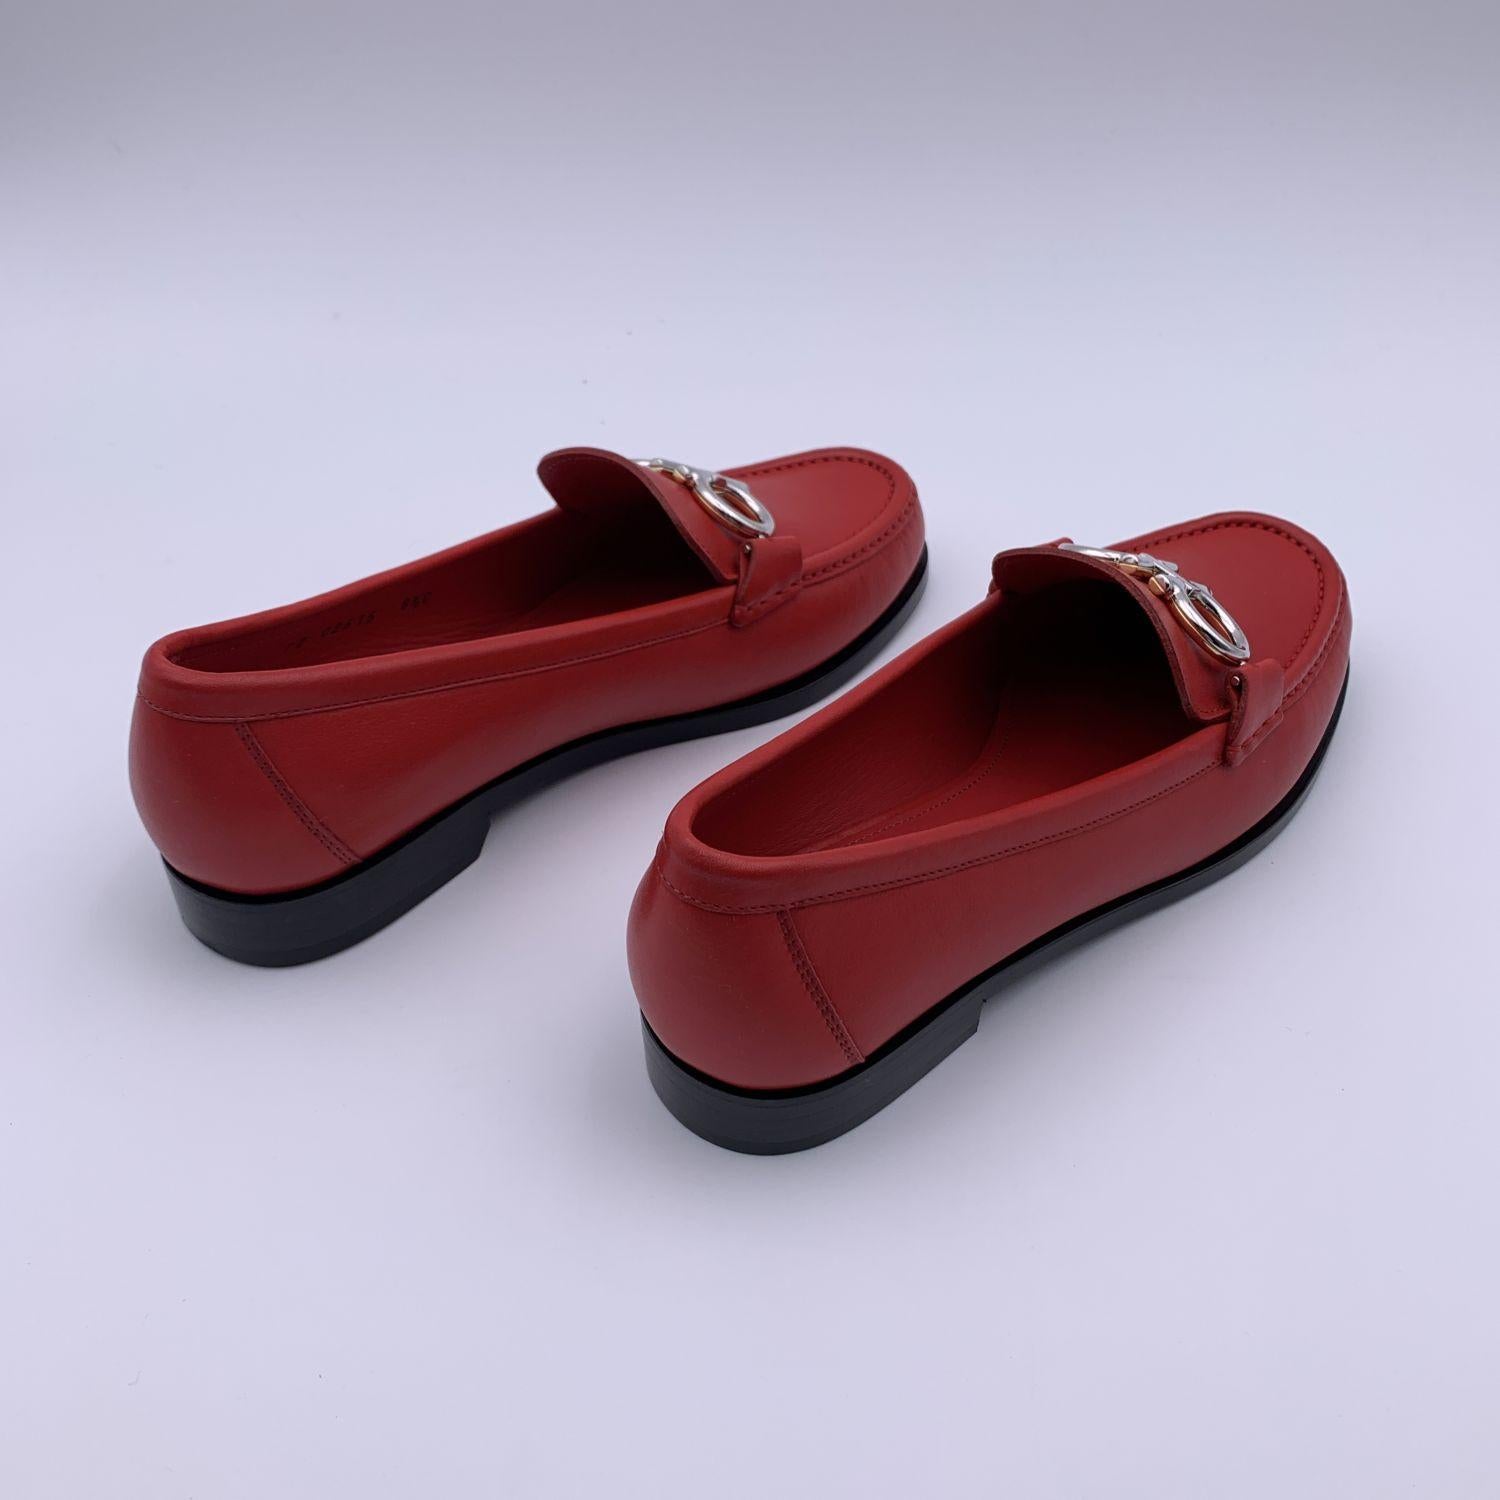 Brown Salvatore Ferragamo Leather Rolo Loafers Moccassins Size 5.5C 36C